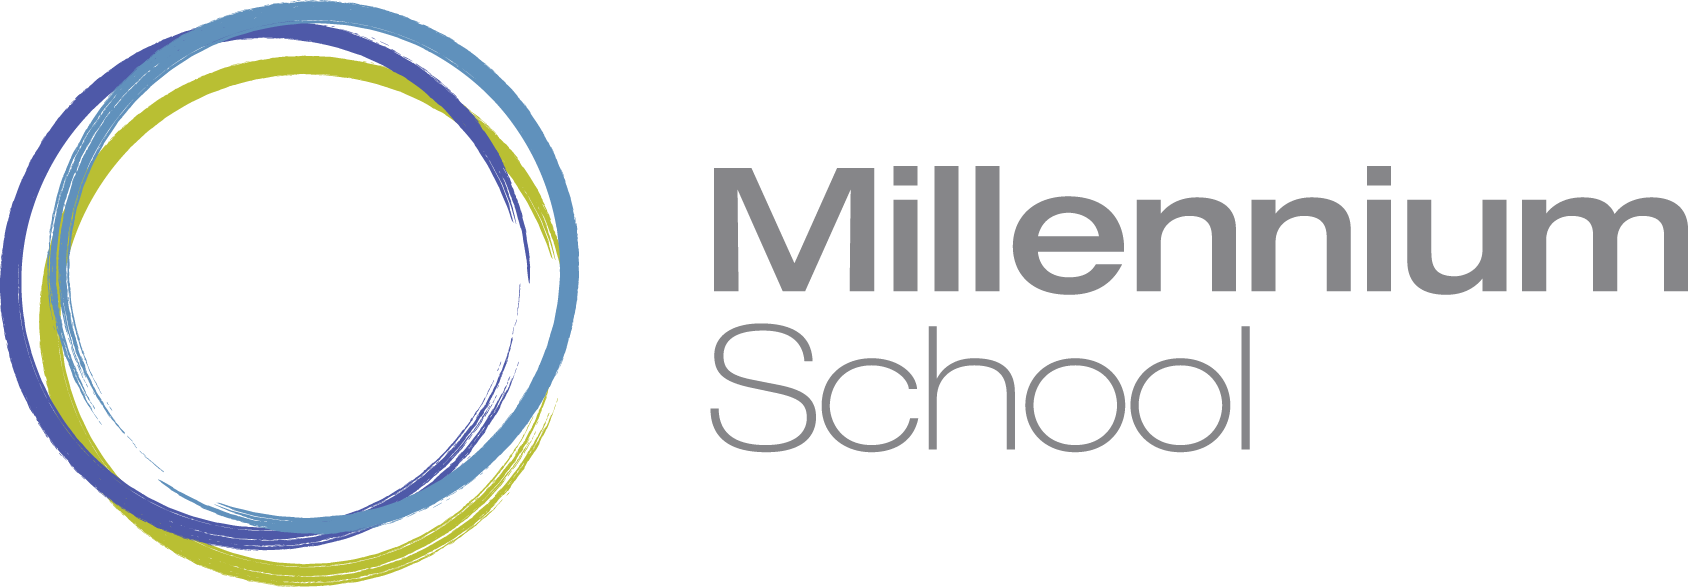 Millennium School logo